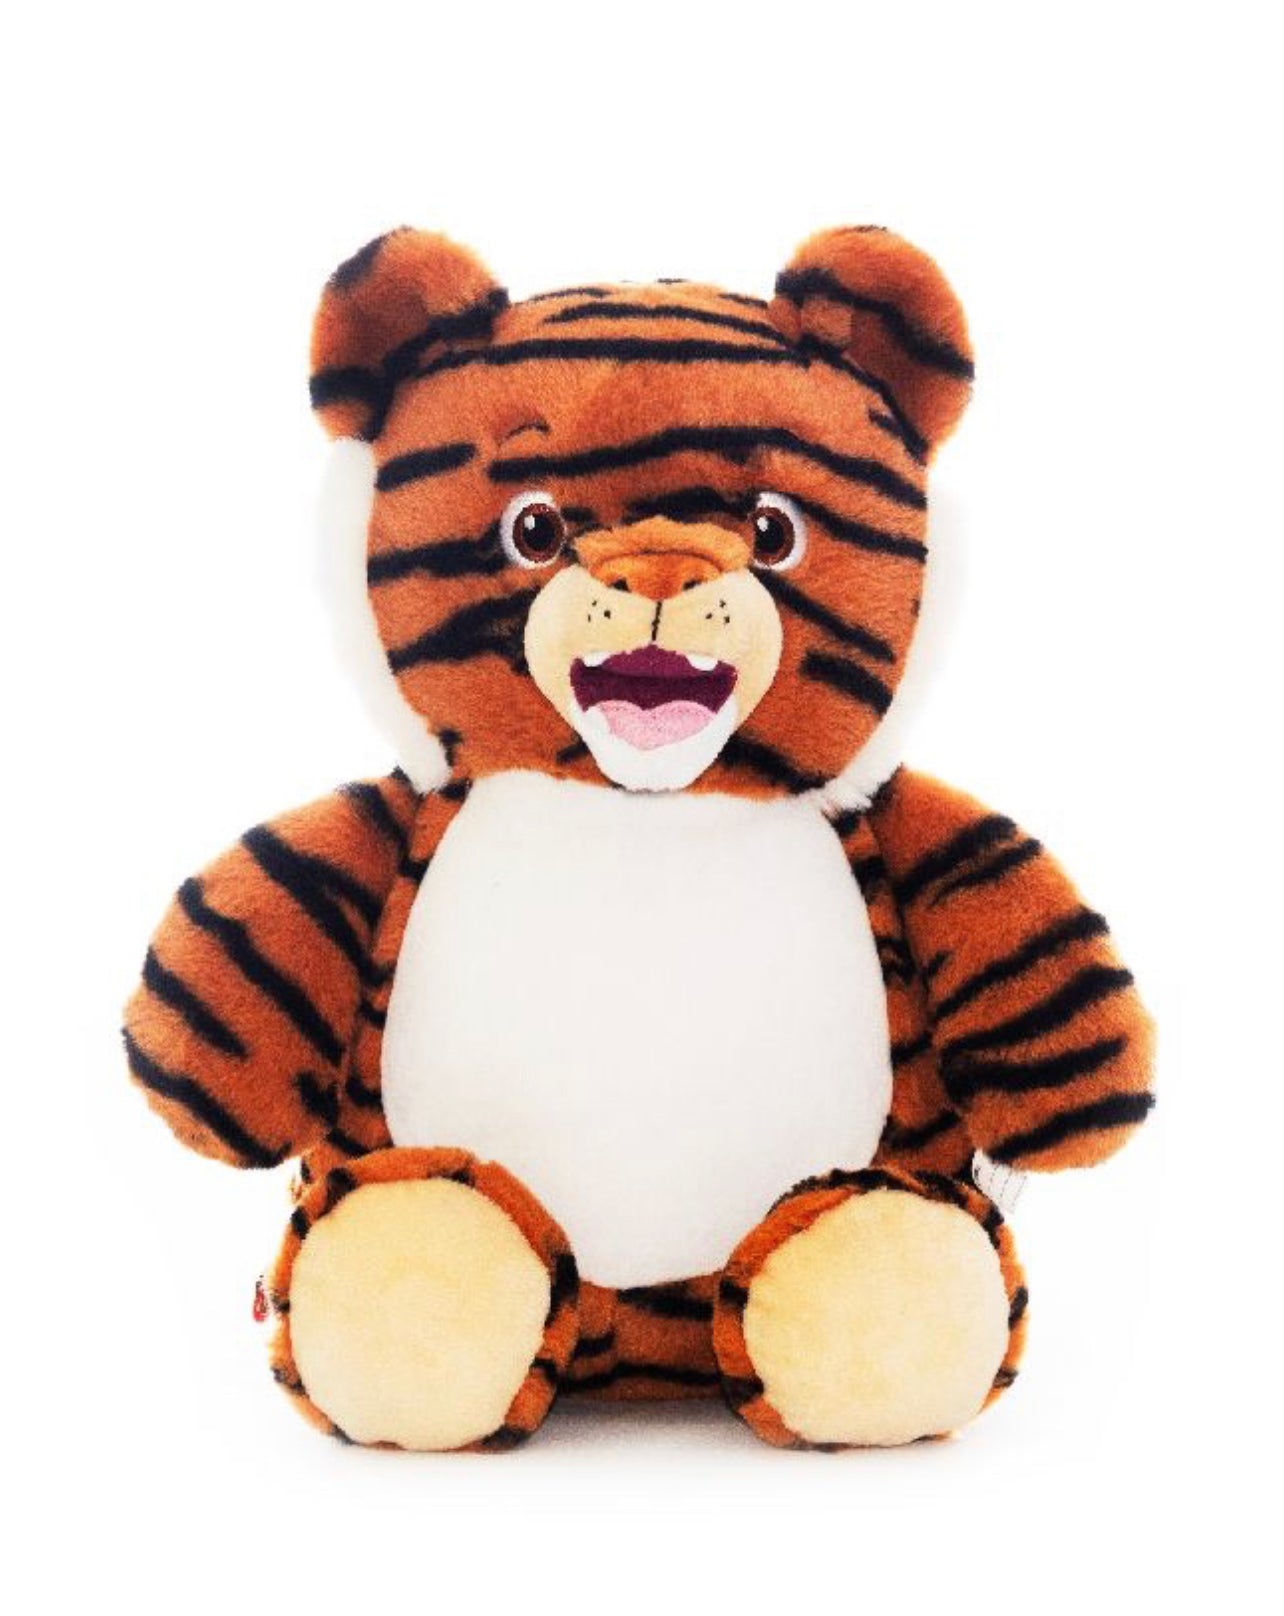 Personalised Teddy Bear - Tiger Cubbie - 40cm